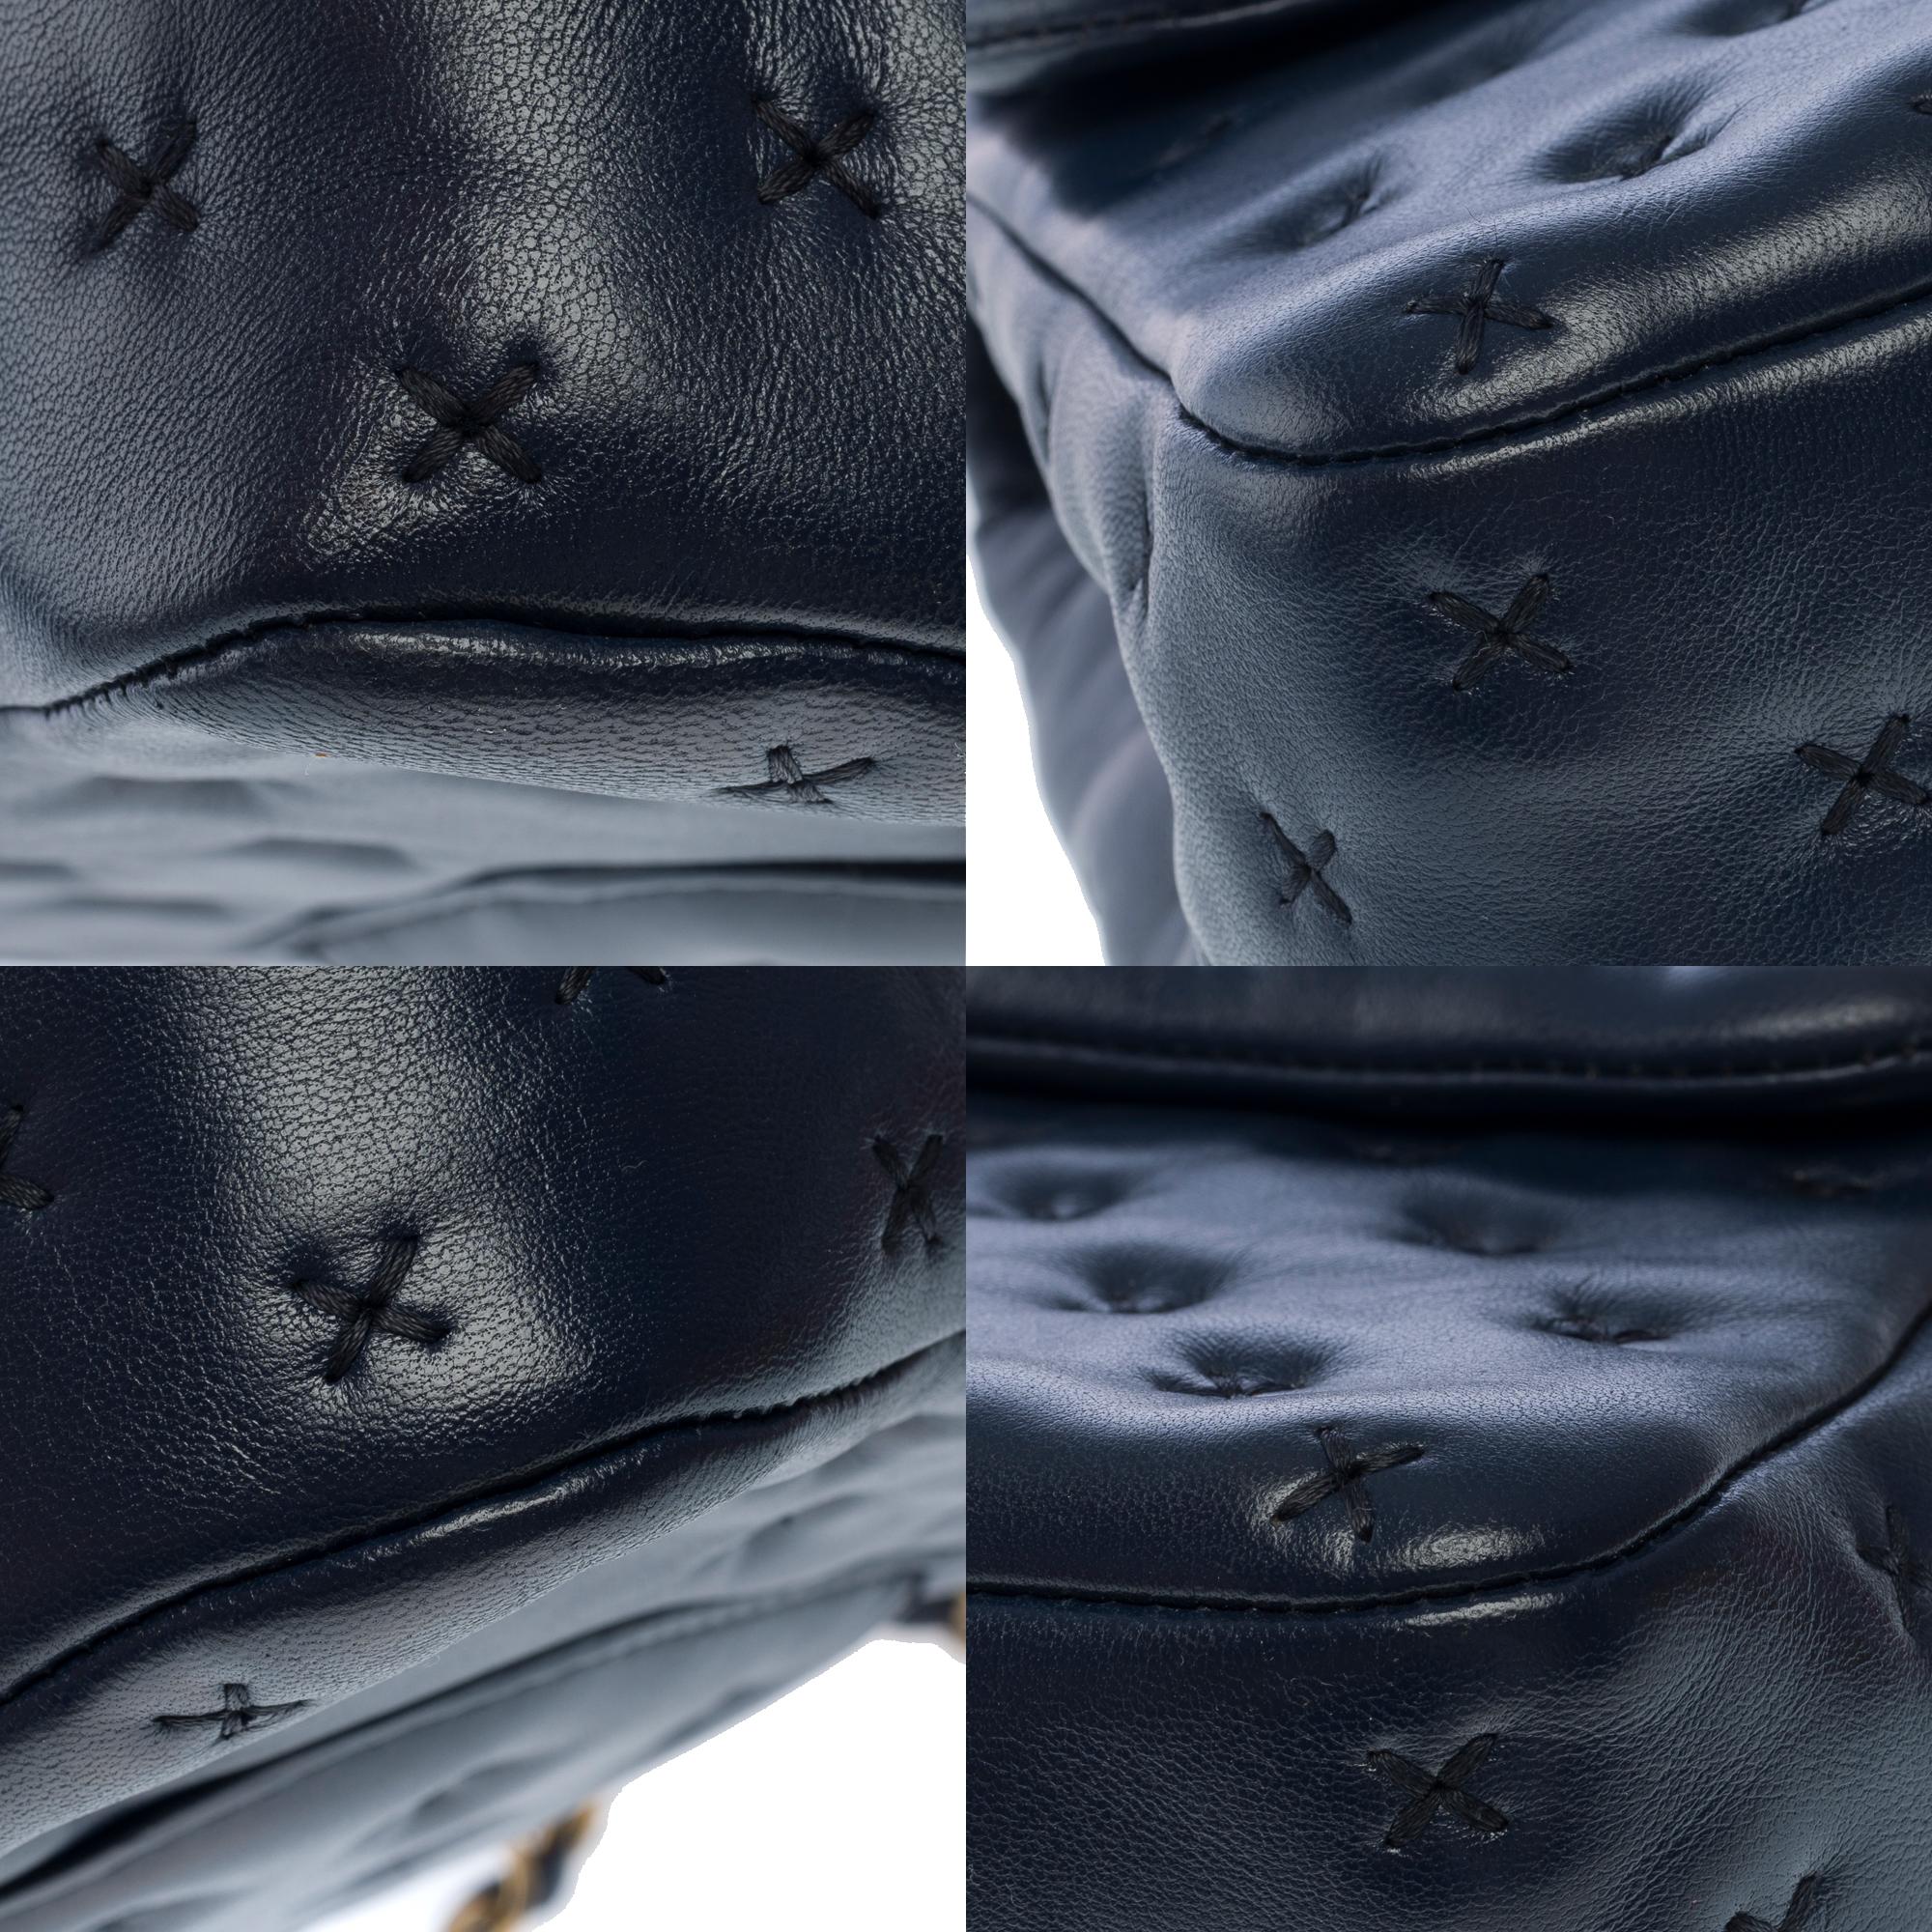 FW2016 Paris-Rome- Chanel Coco handle handbag in Navy blue lambskin leather, GHW 7